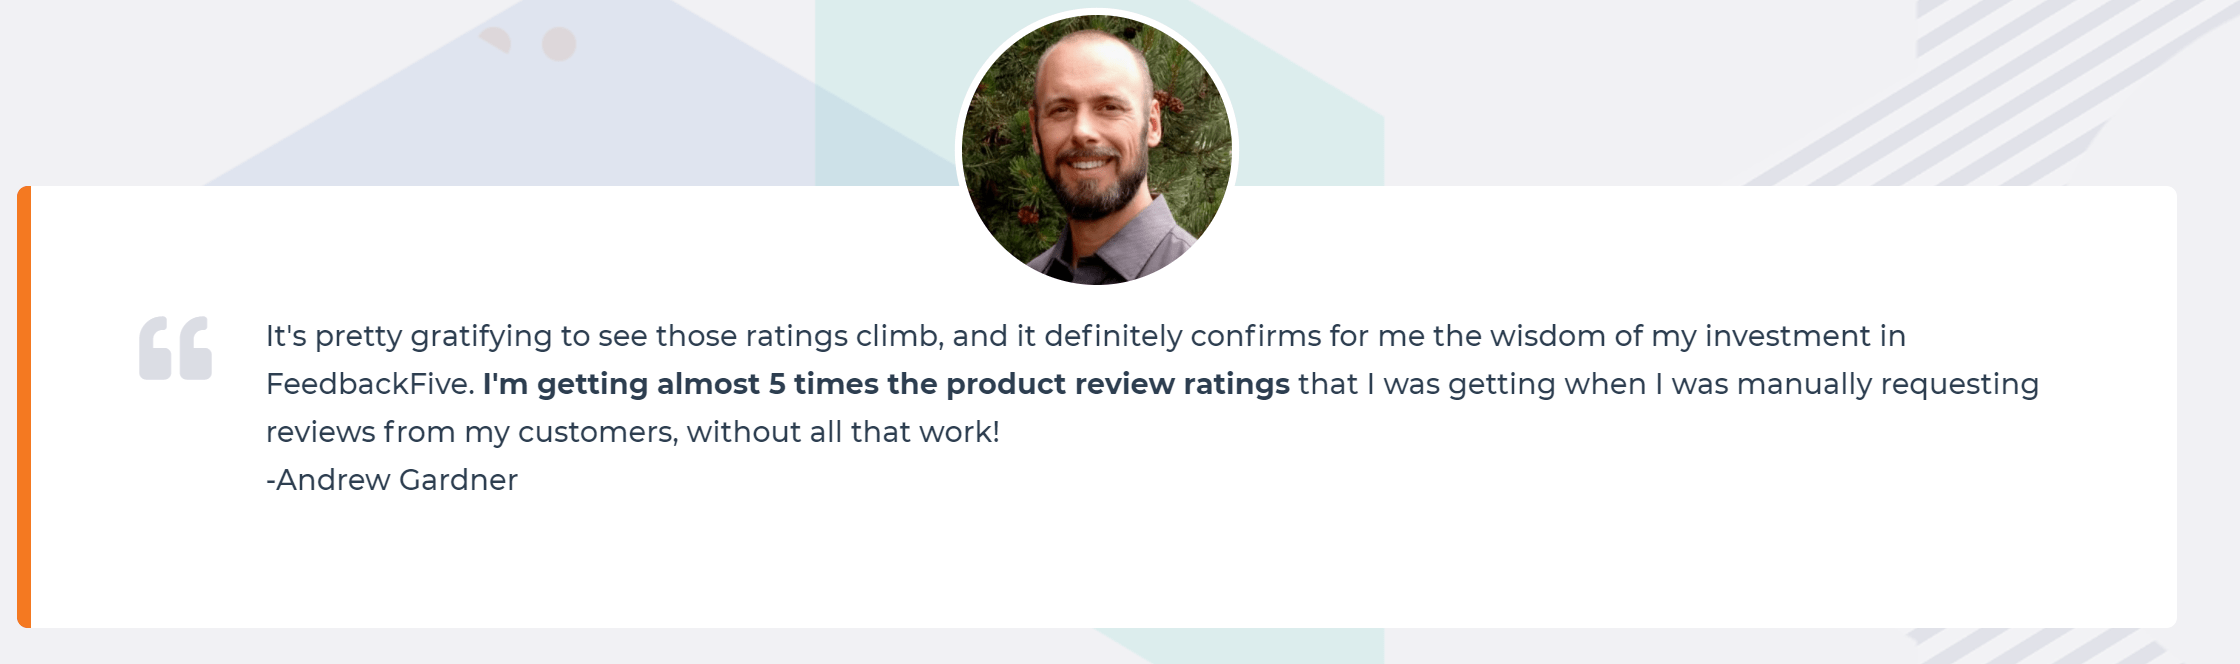 Feedbackfive reviews by customers